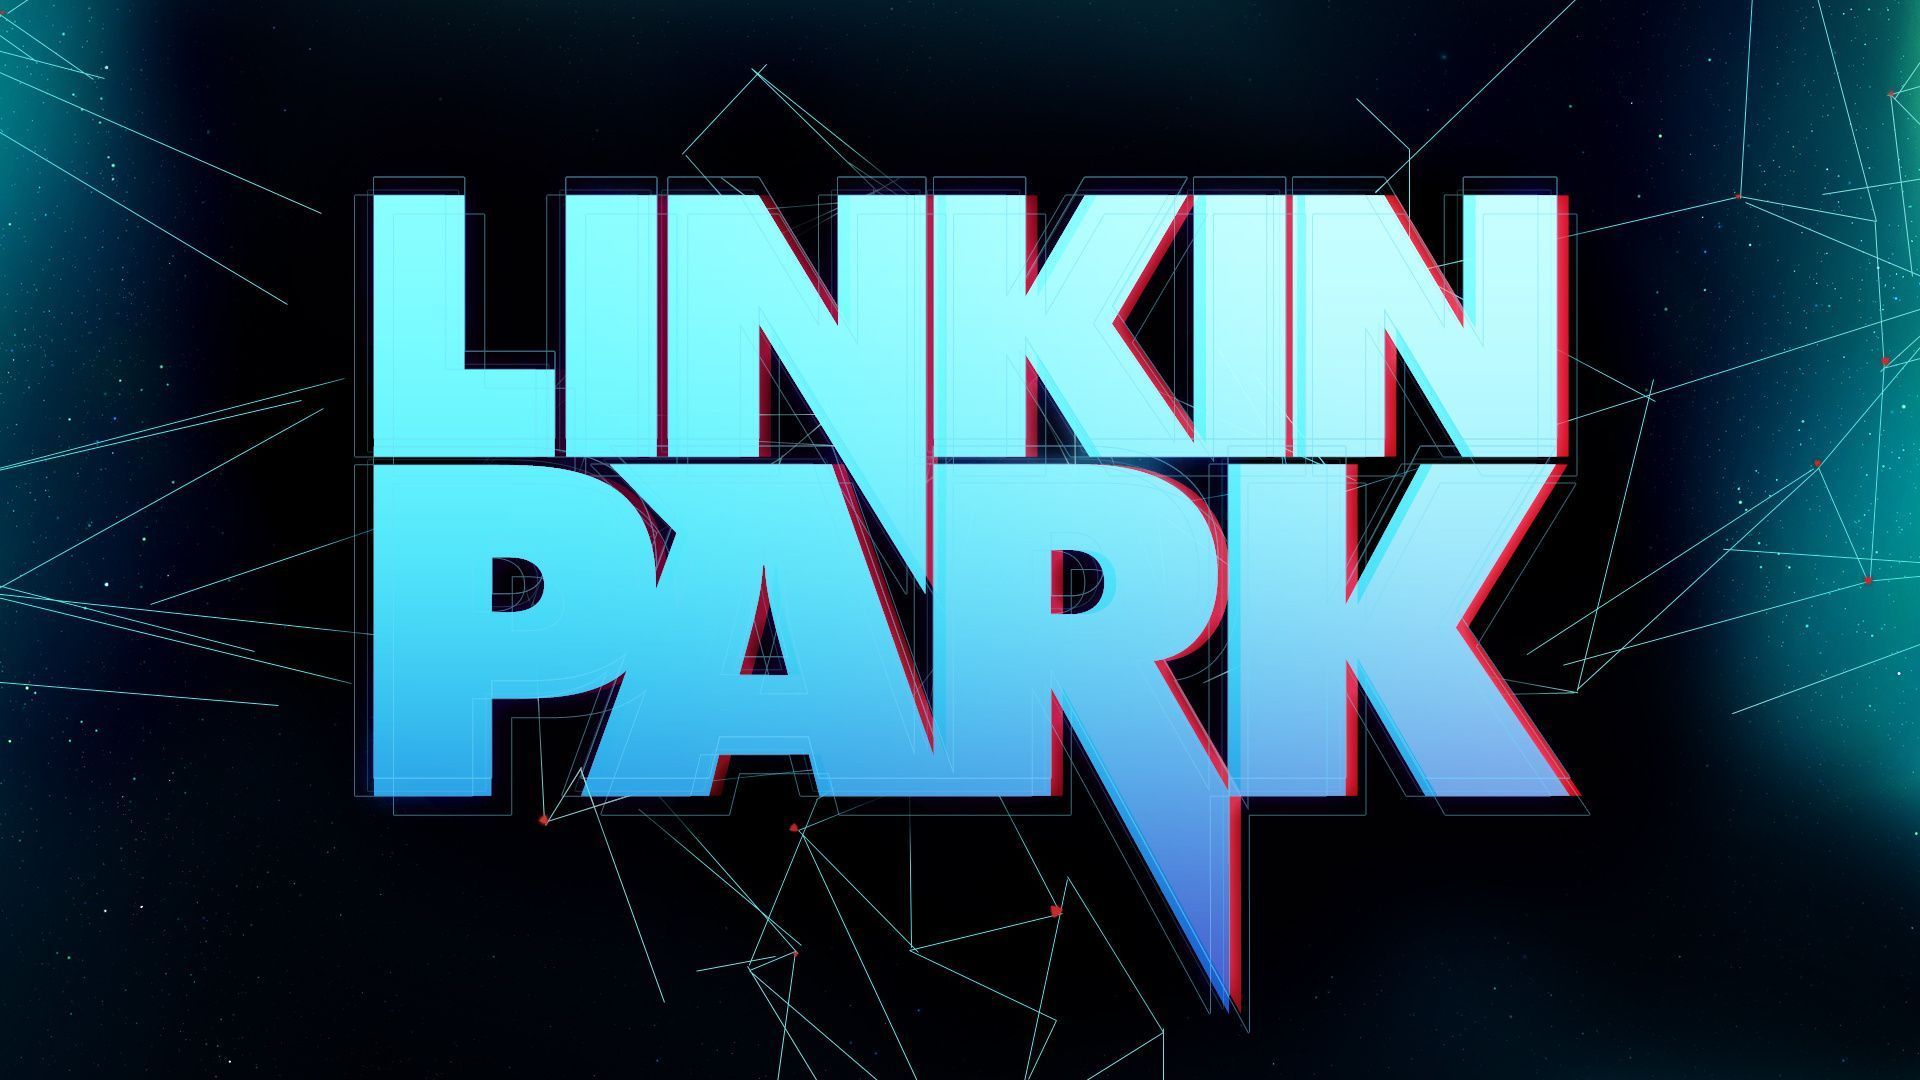 Linkin Park HD Wallpaper, Linkin Park Backgrounds | Cool Wallpapers